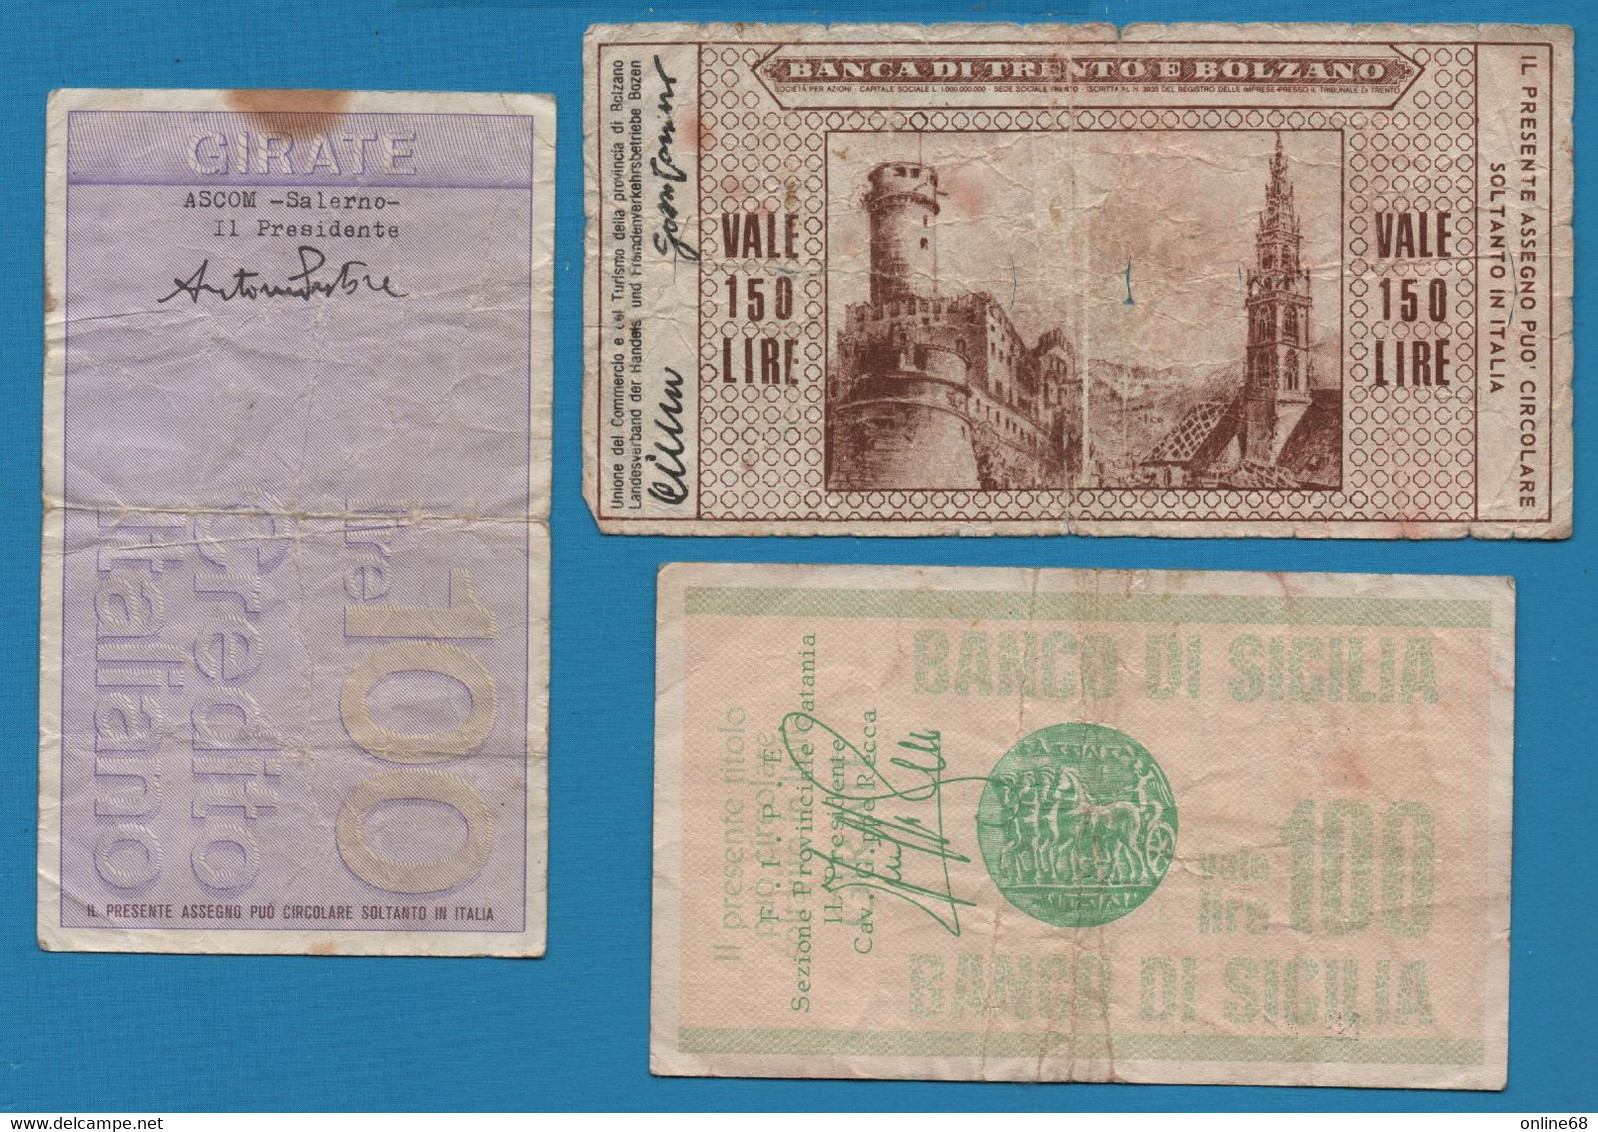 ITALIA ASSEGNO GIRATE ITALIANO LOT 3 NOTES 1976 - Lots & Kiloware - Banknotes